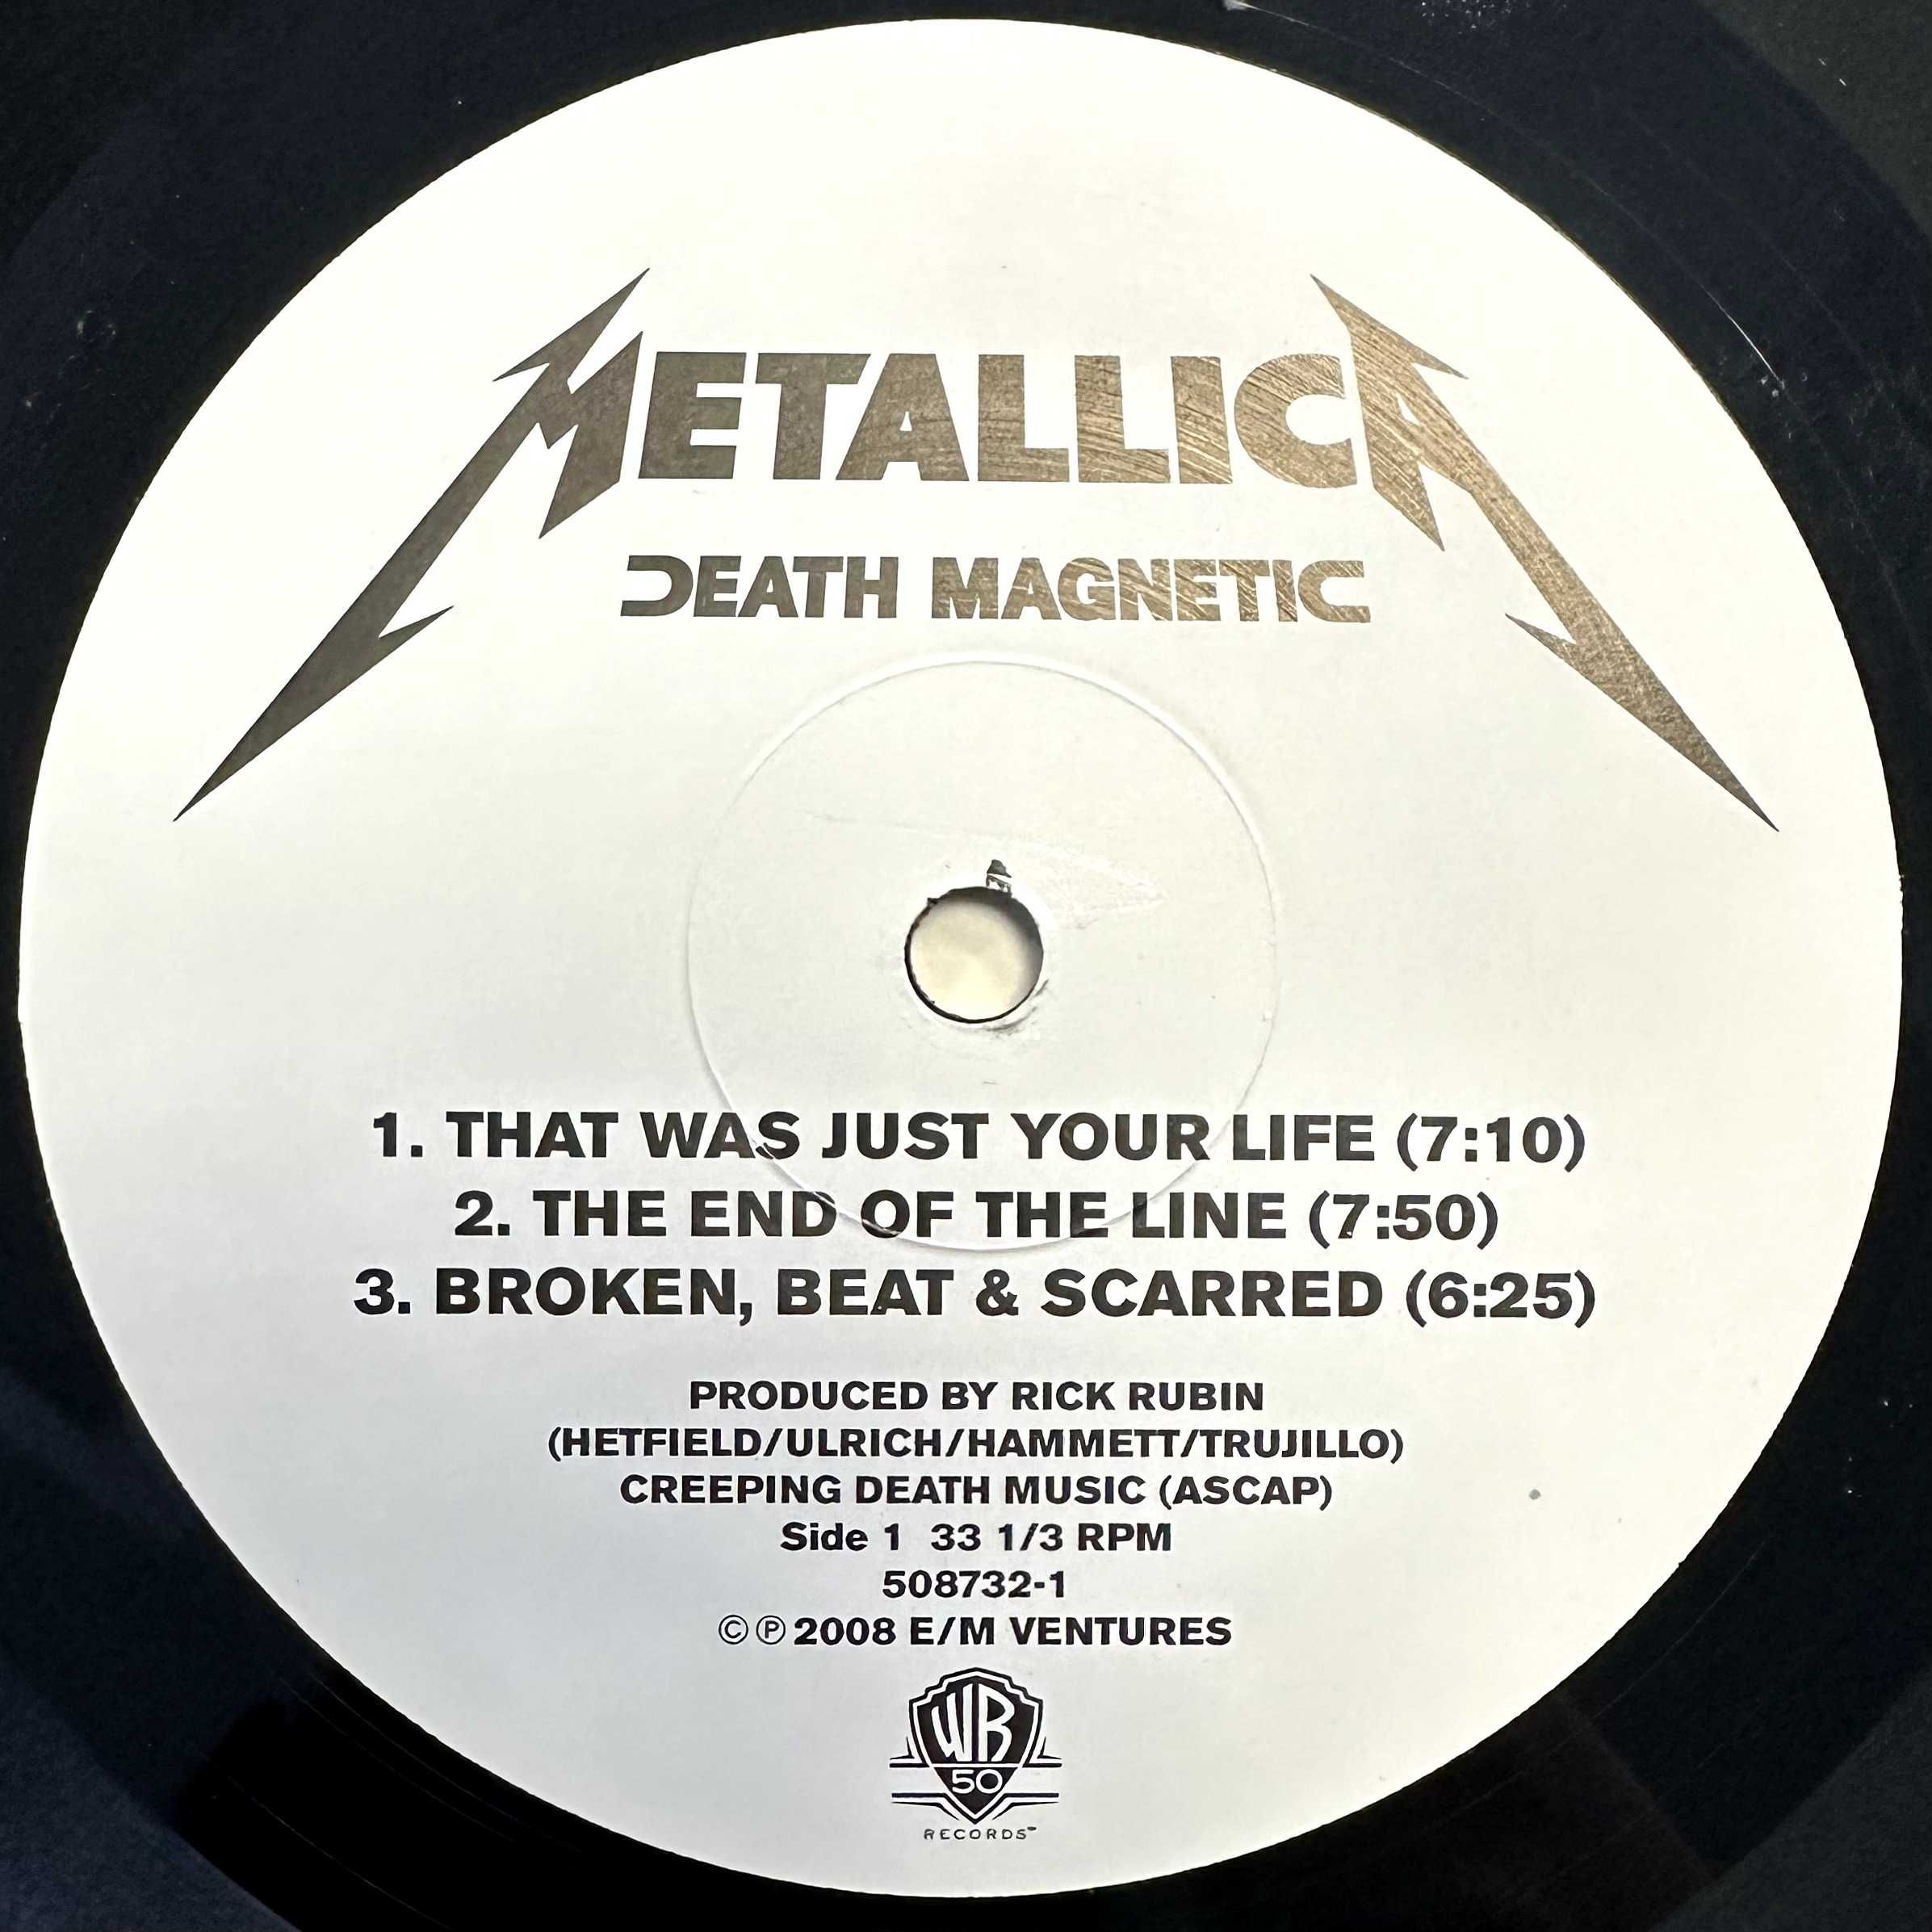 Metallica - Death Magnetic (Vinyl, 2008, US)